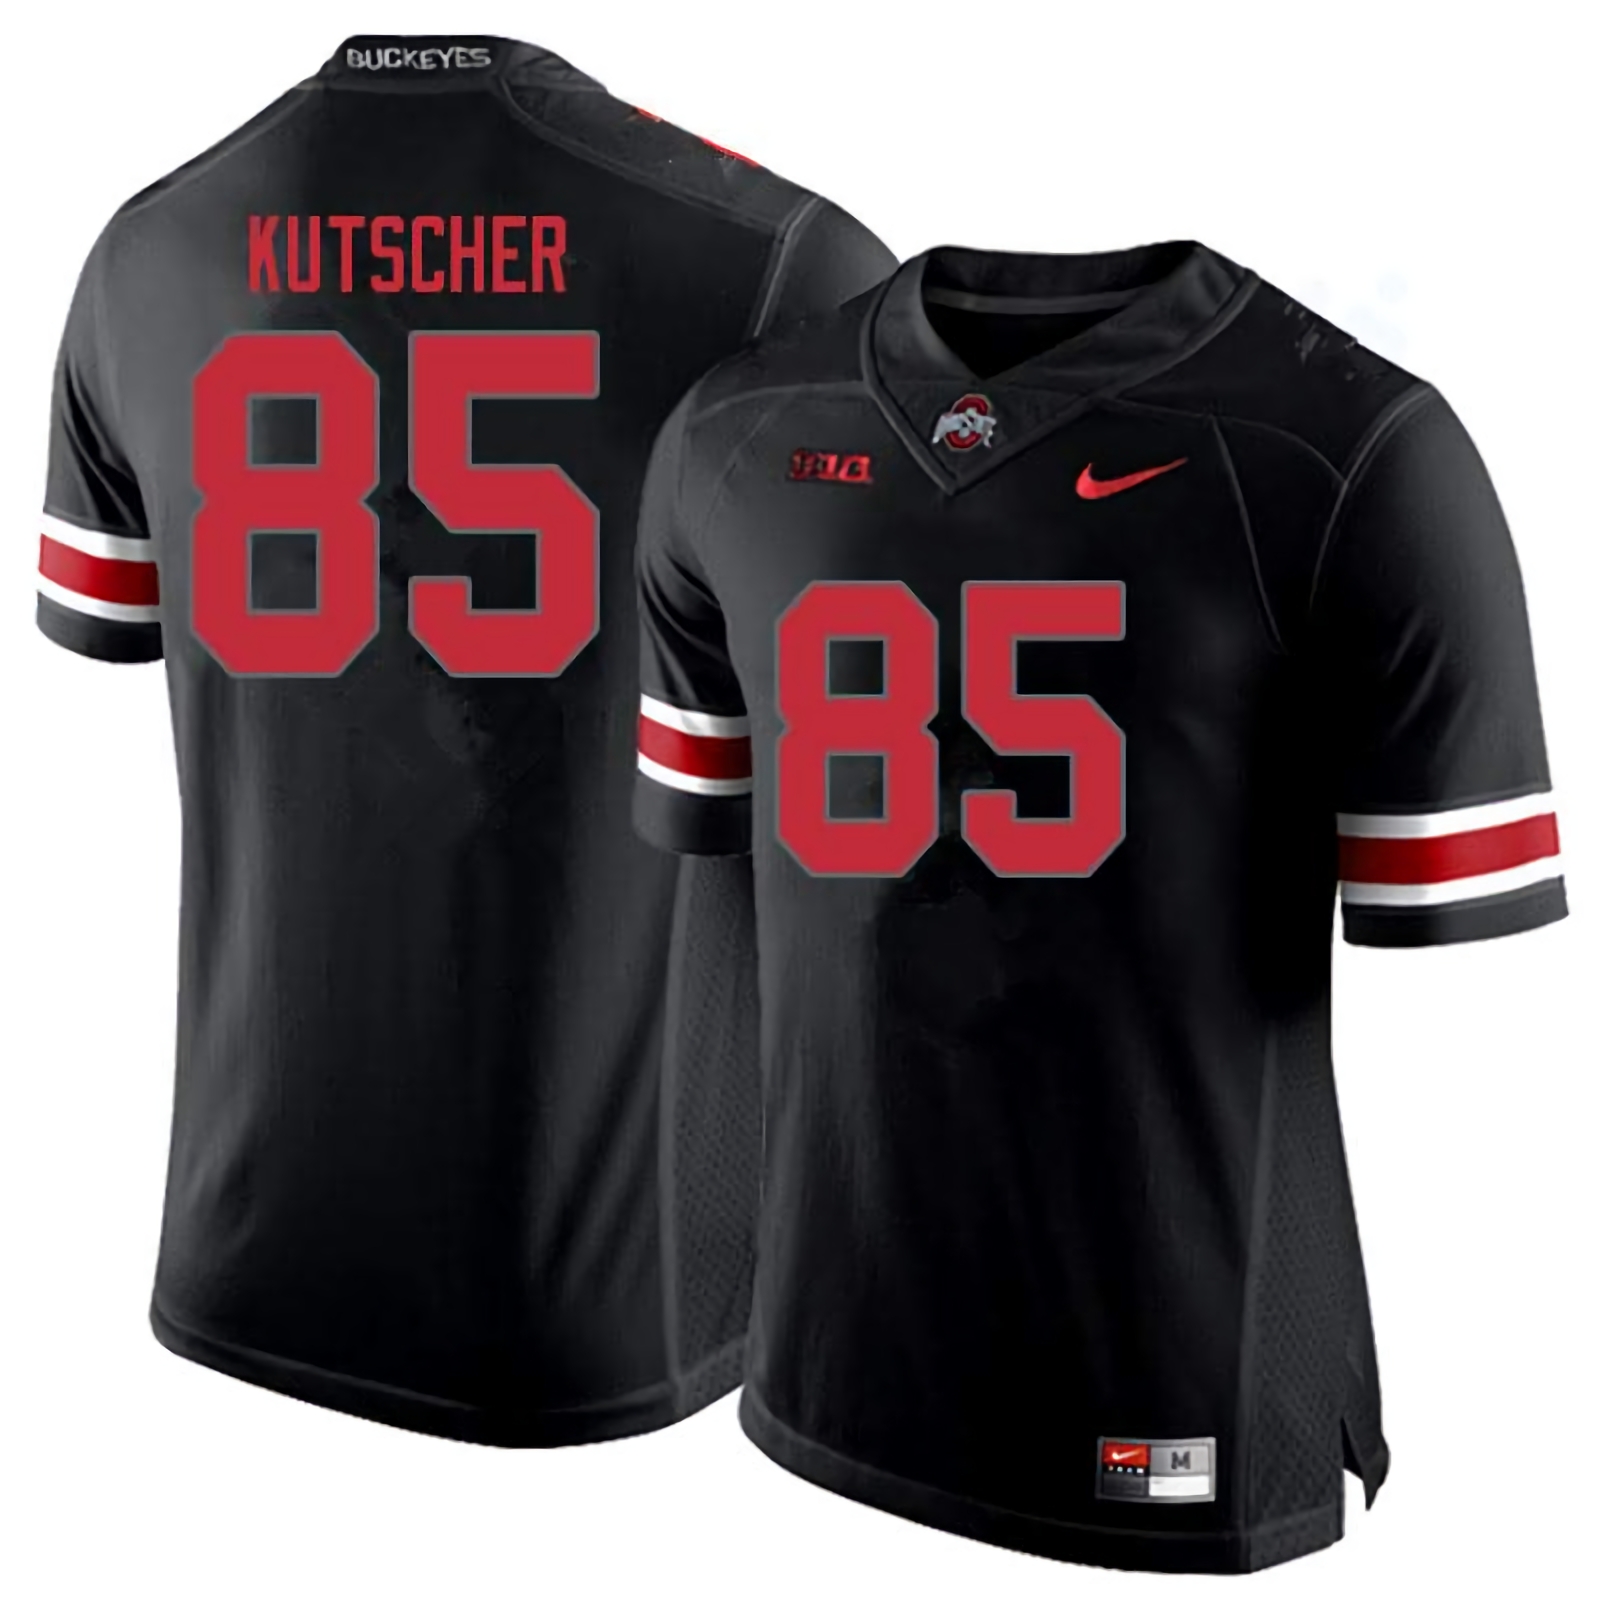 Austin Kutscher Ohio State Buckeyes Men's NCAA #85 Nike Blackout College Stitched Football Jersey MHV6056TU